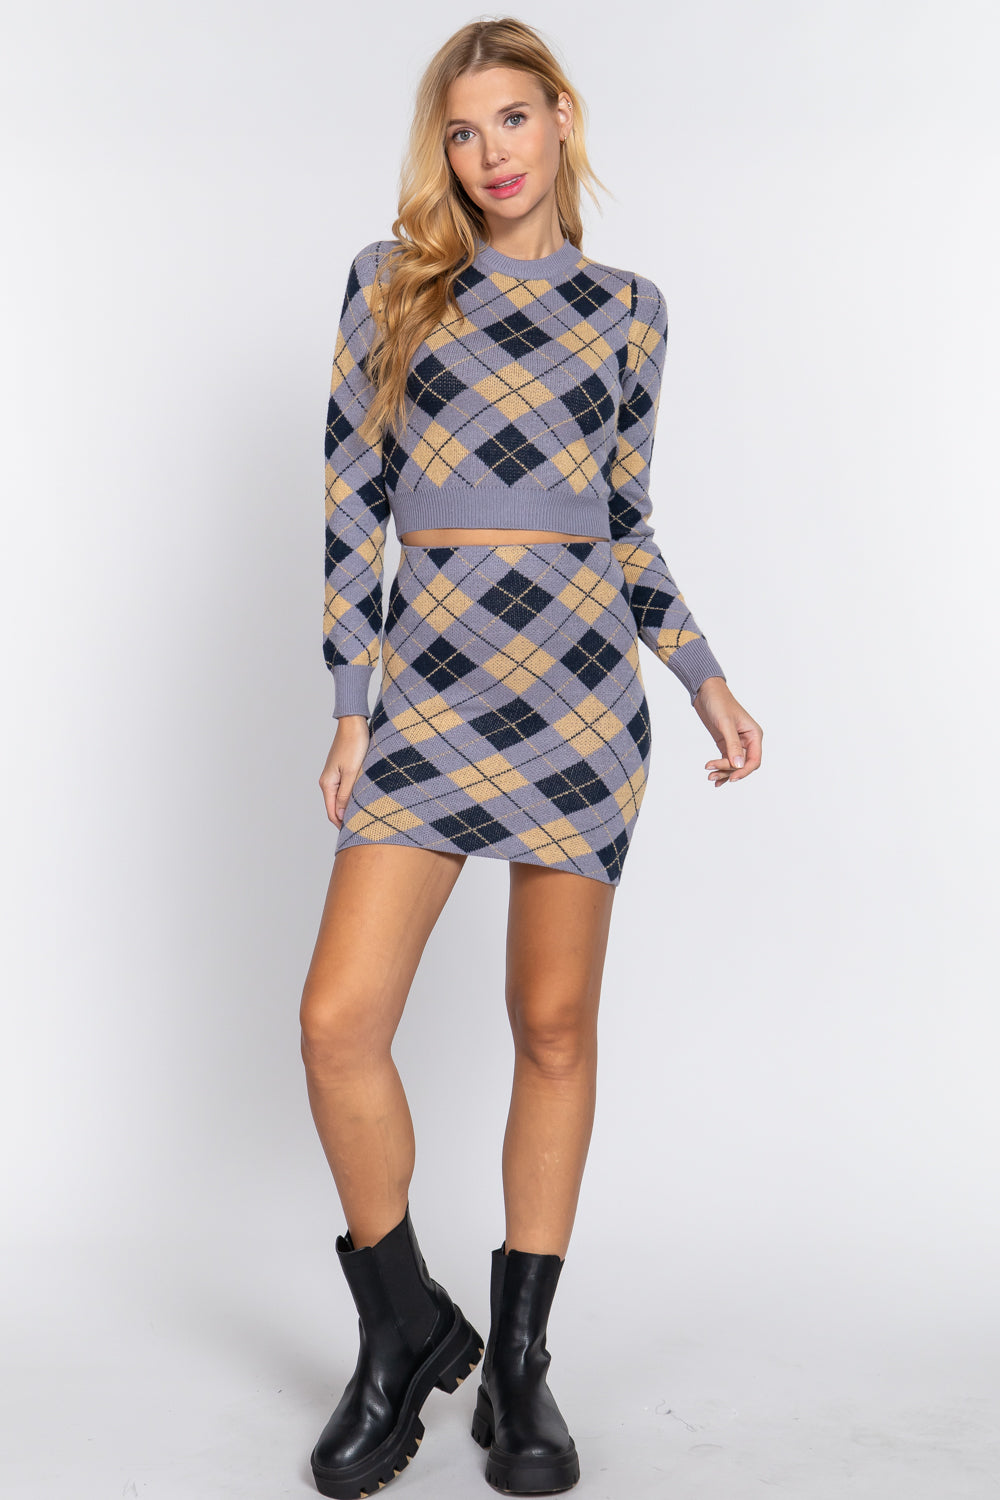 Argyle Jacquard Crop Sweater - Tigbuls Variety Fashion